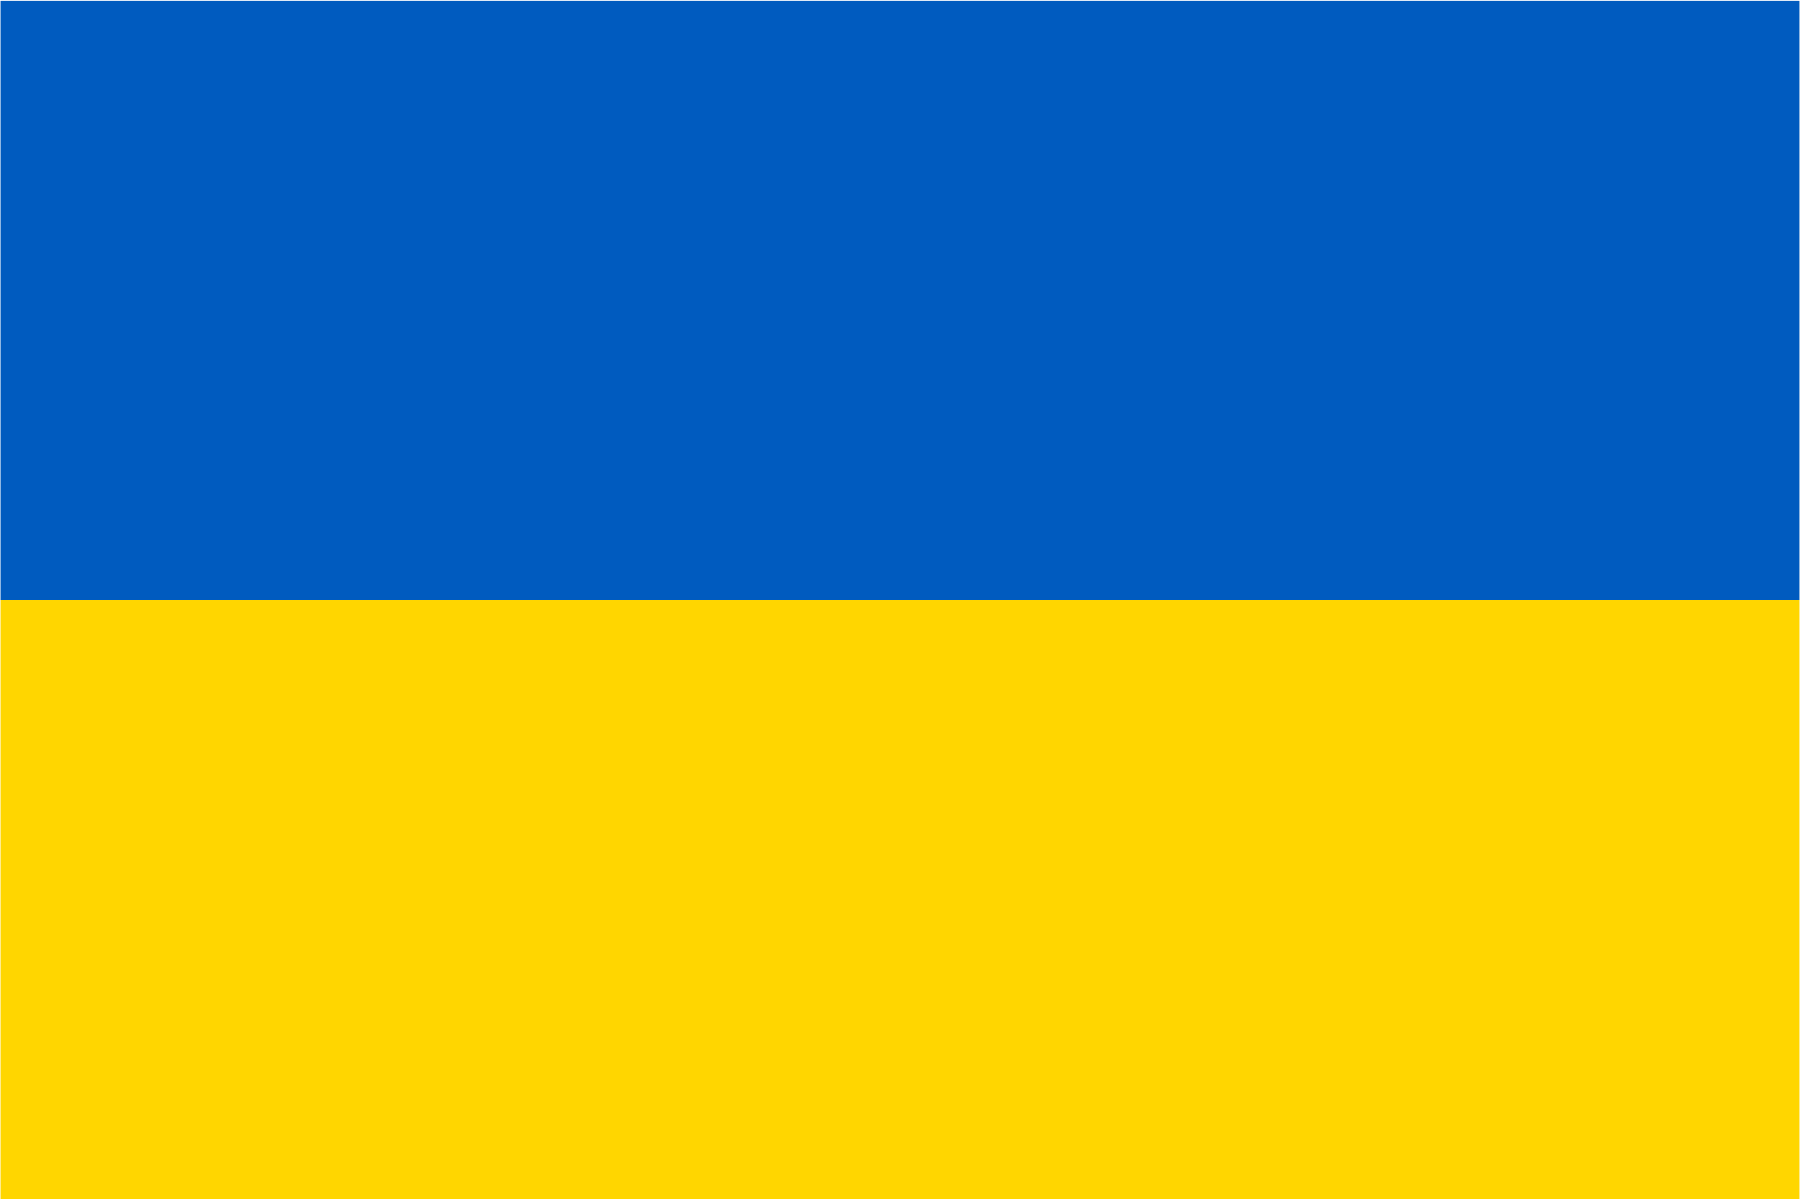 Ukrainian flag2